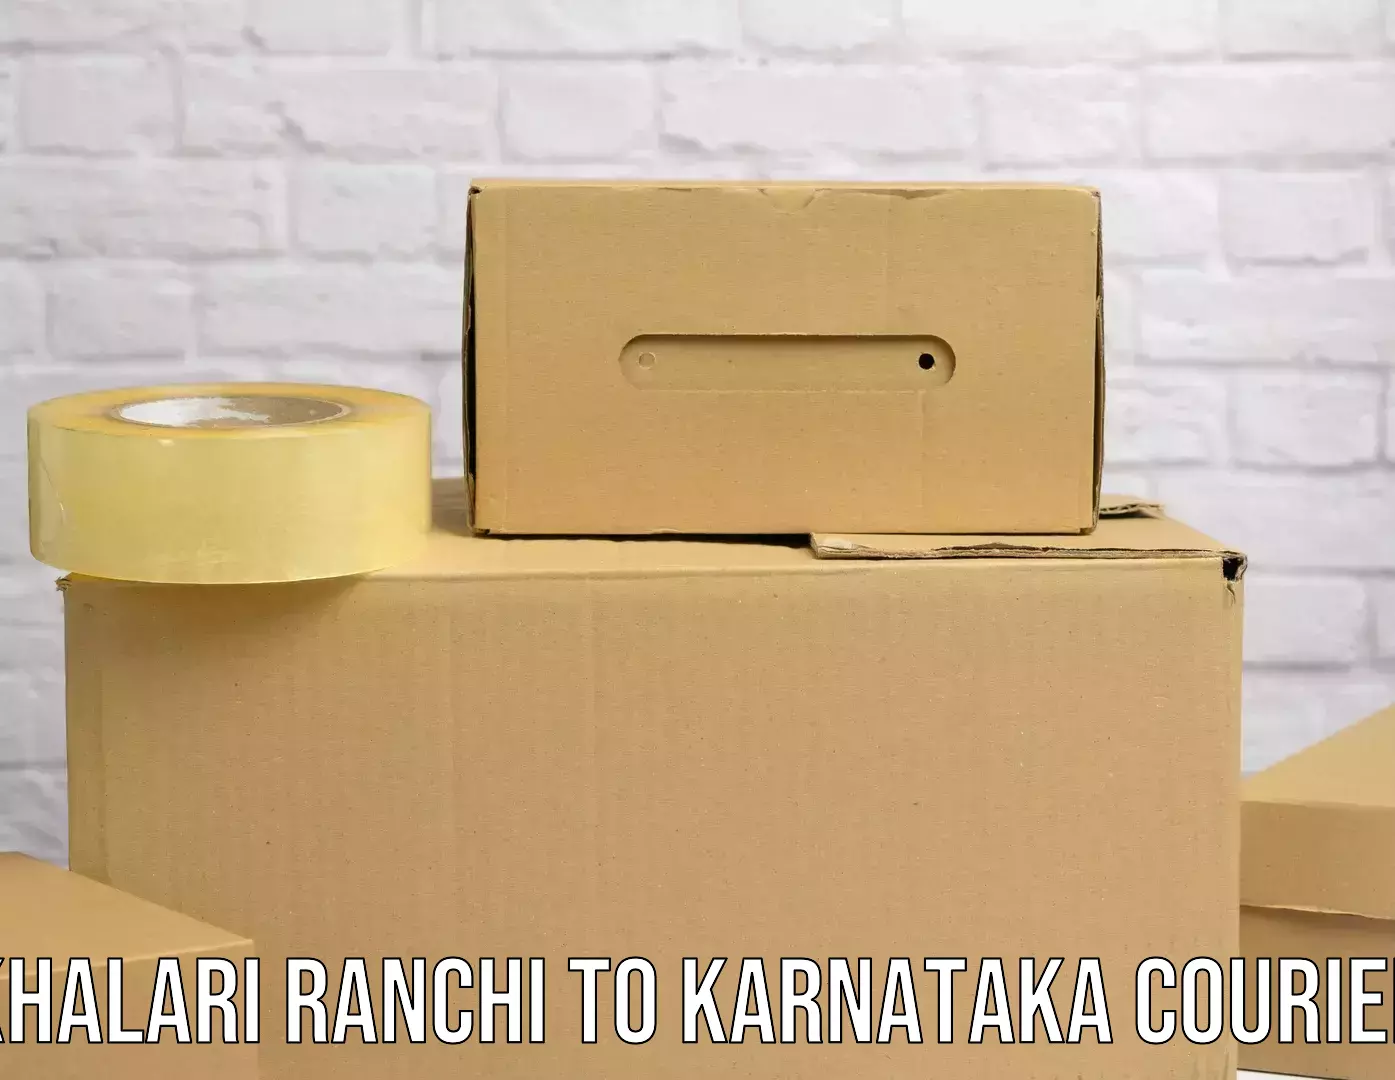 Cash on delivery service Khalari Ranchi to Bangalore